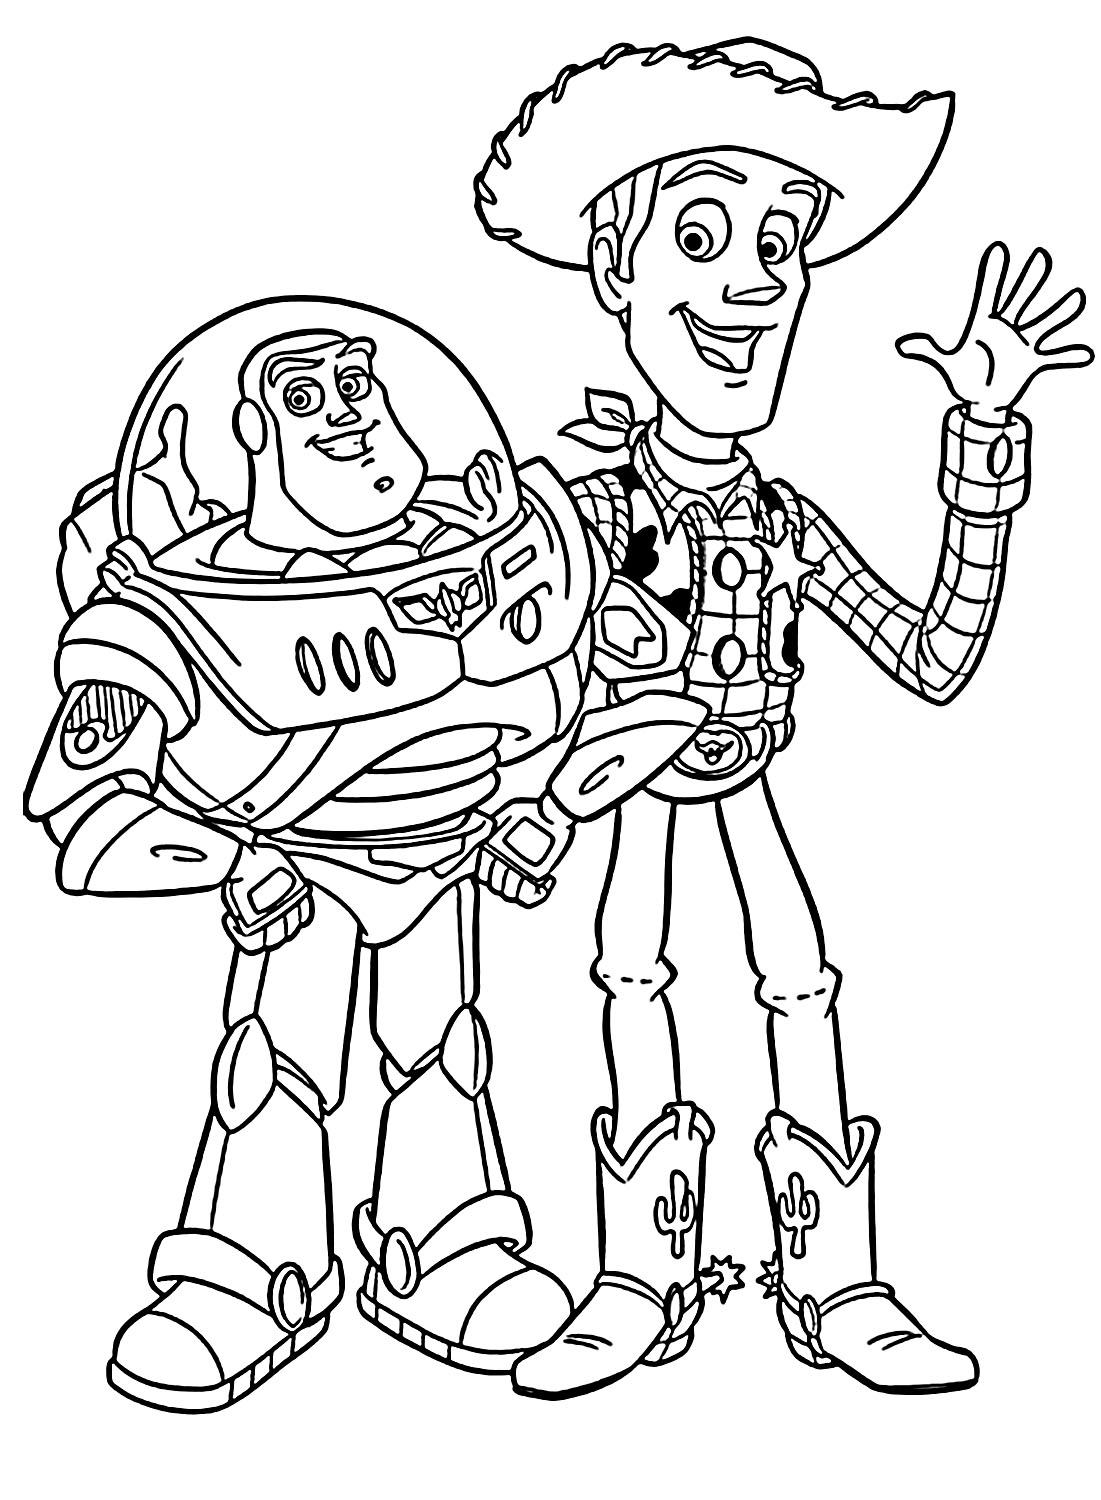 Woody und Buzz aus Toy Story